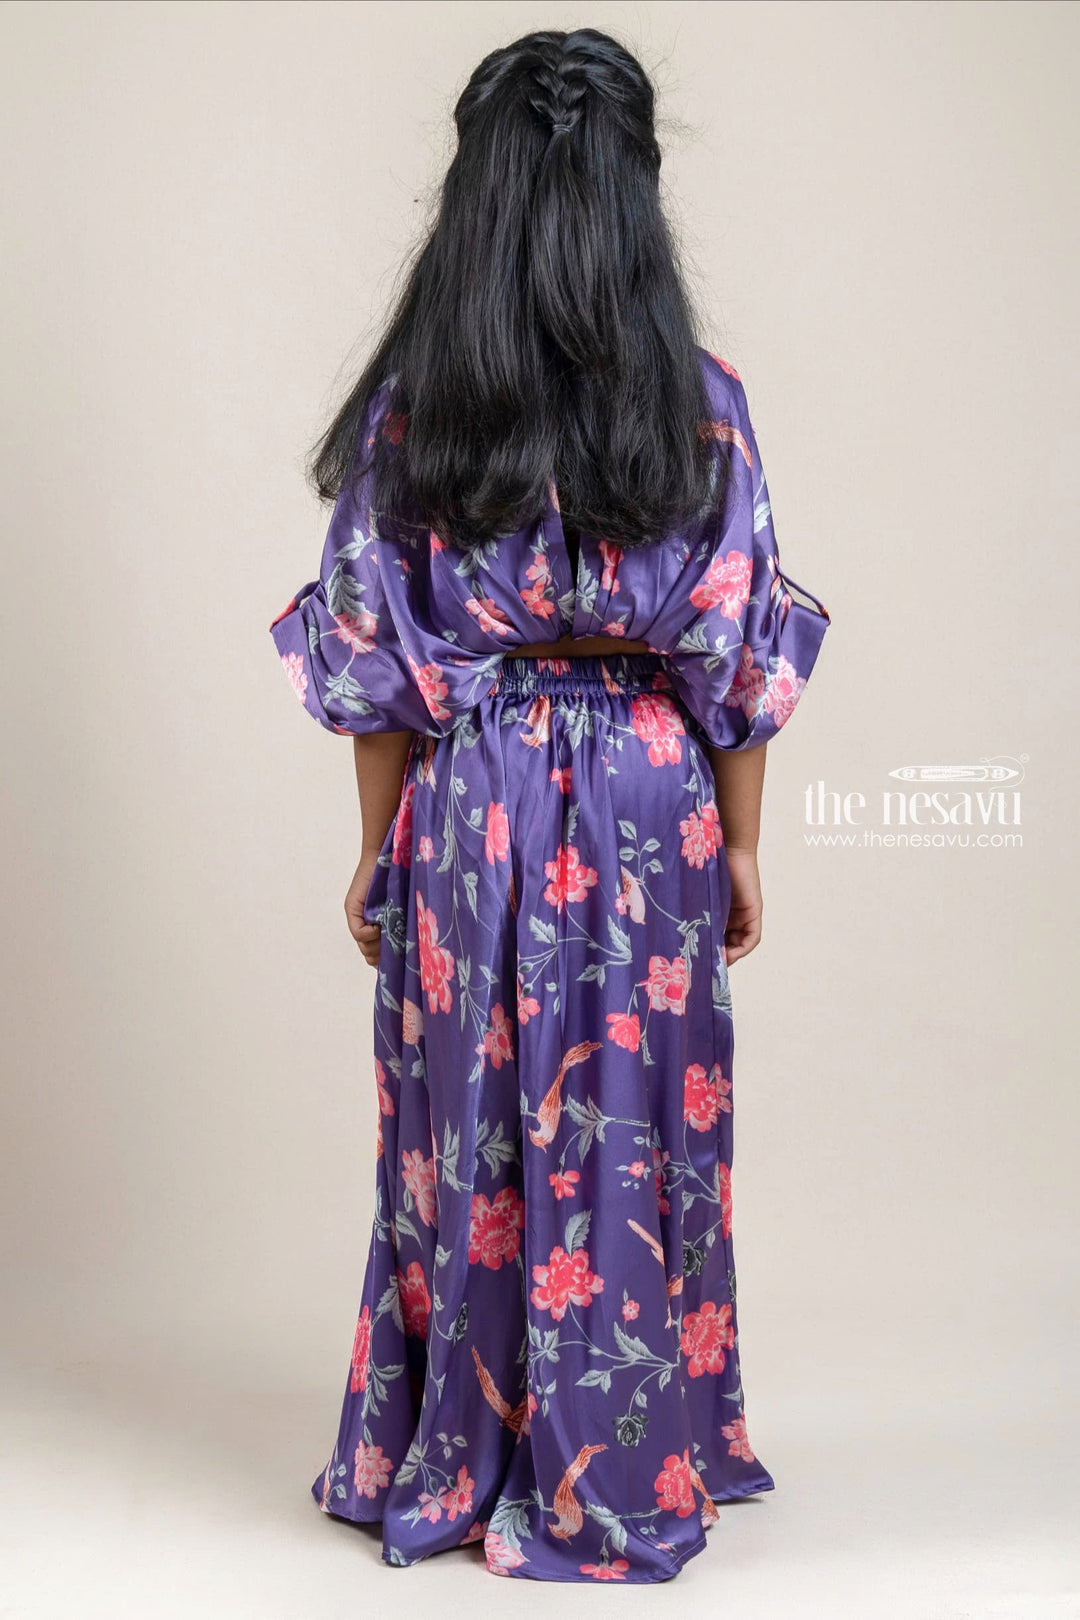 The Nesavu Girls Sharara / Plazo Set Charming Purple Floral Printed Top And Skirt For Young Girls Nesavu Premium Floral Printed Top And Skirt | Tunic Top Collection | The Nesavu